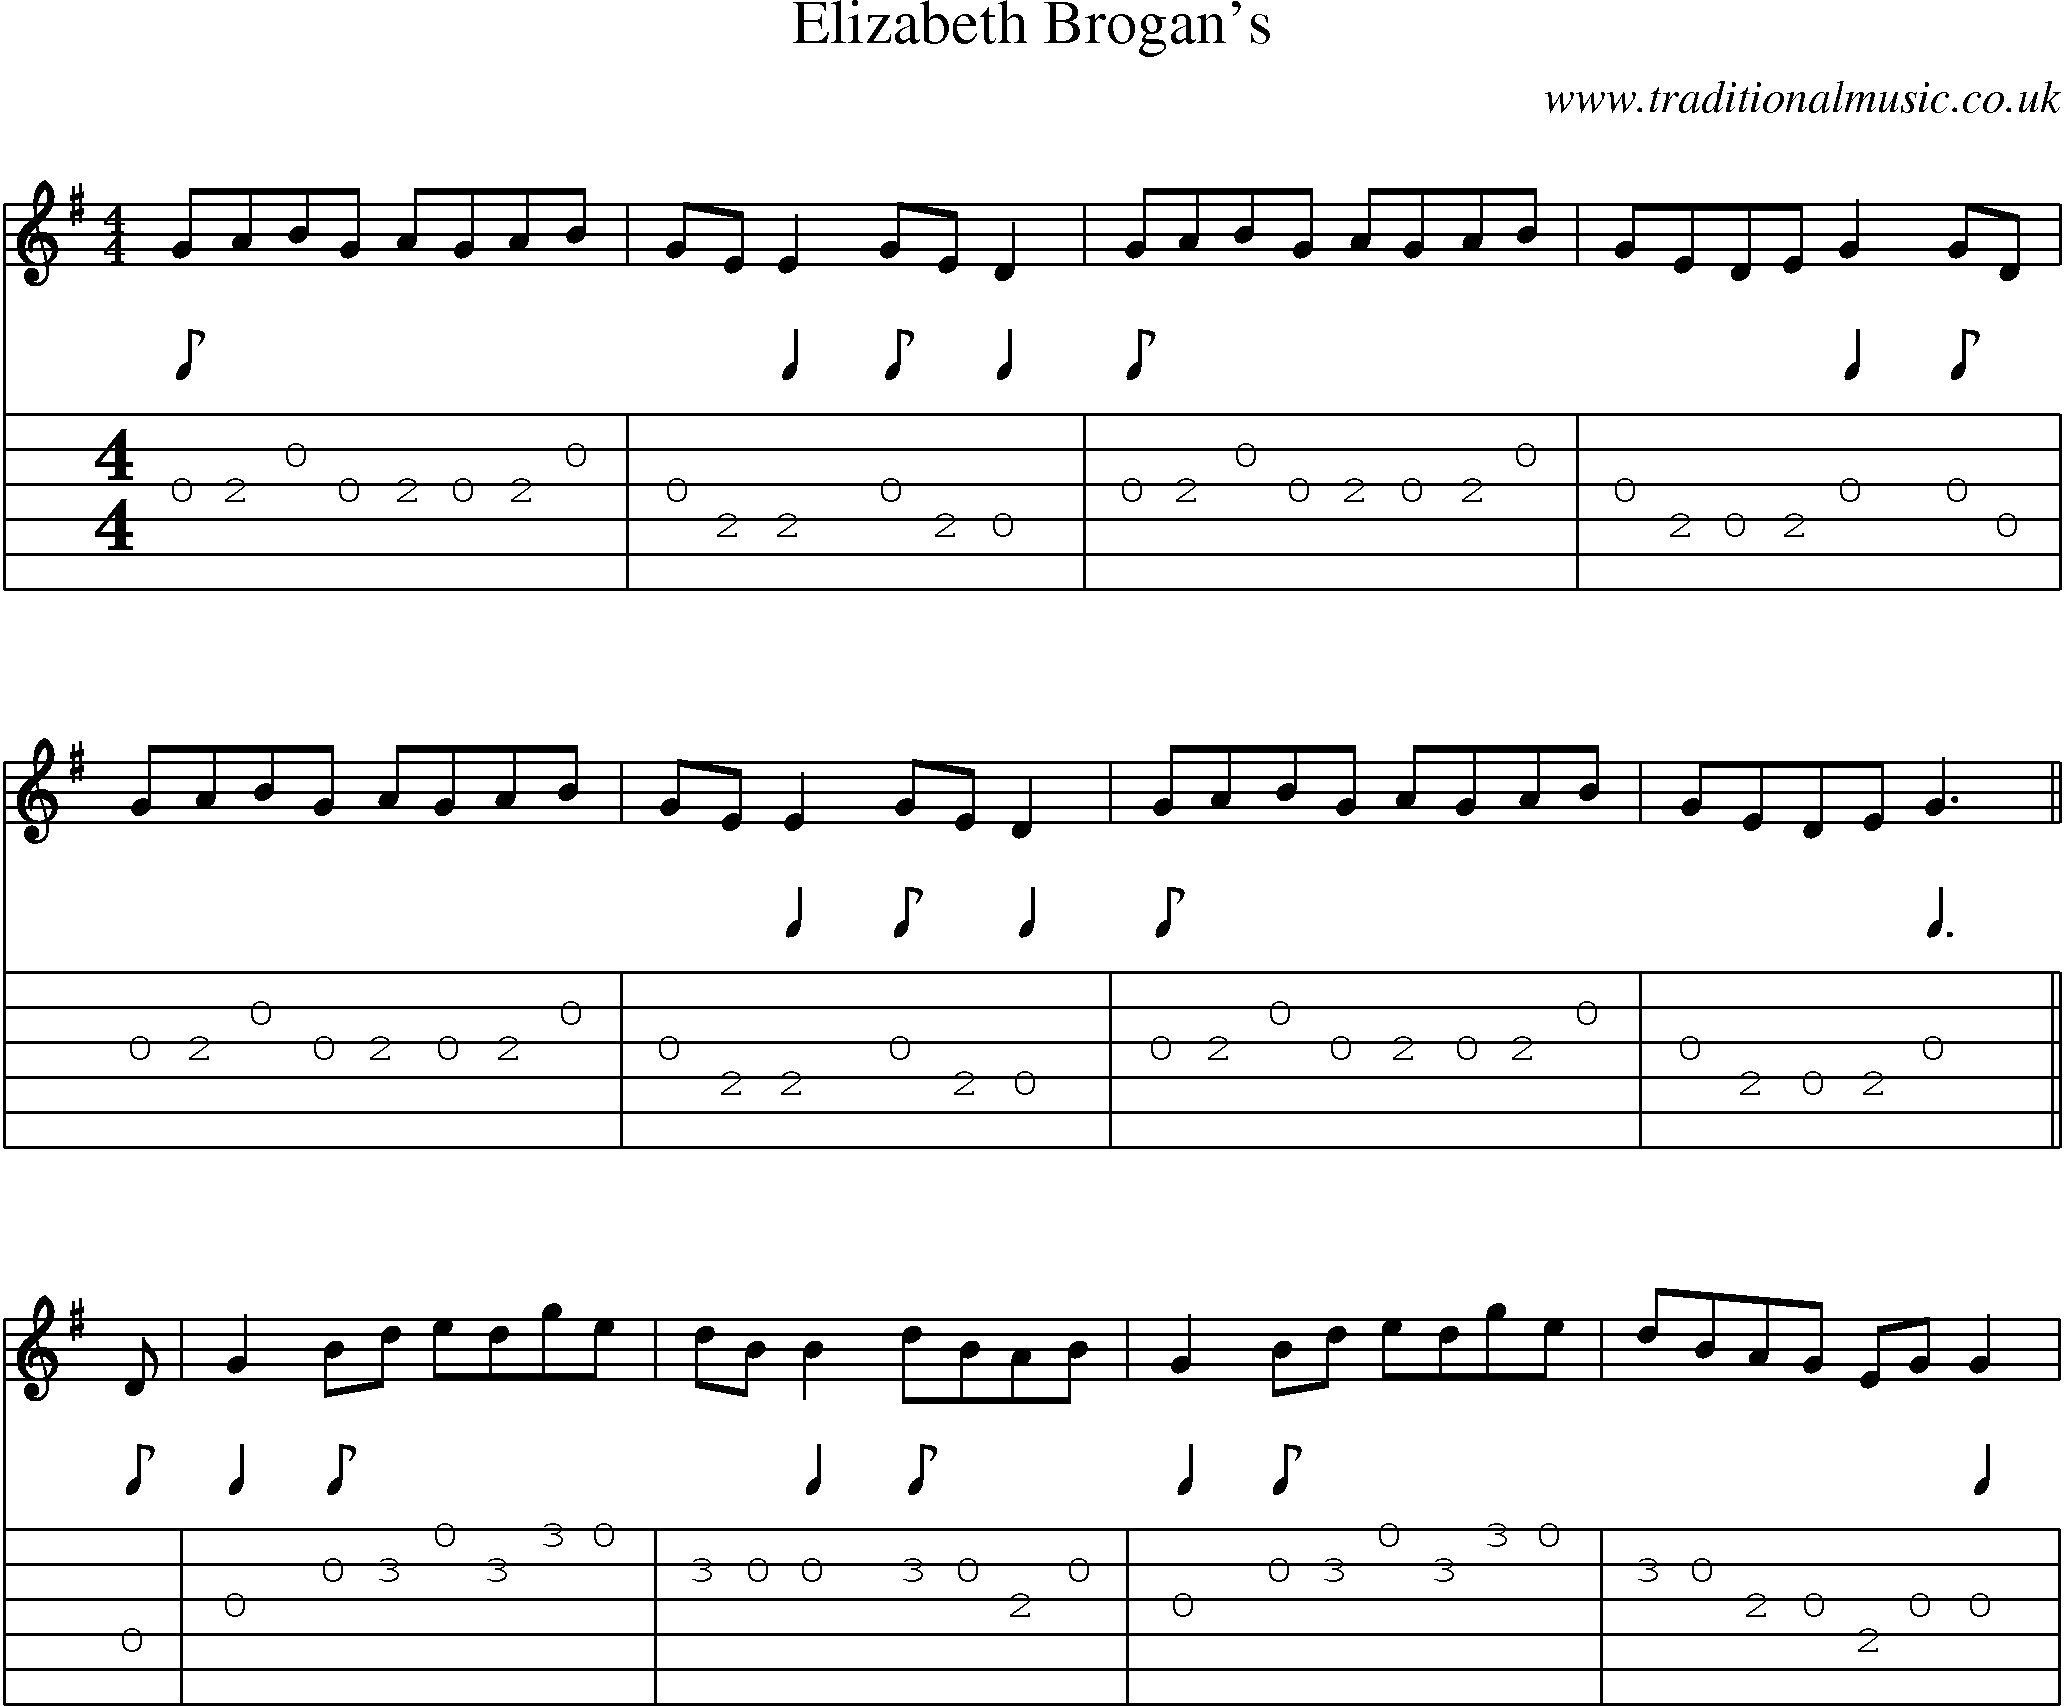 Music Score and Guitar Tabs for Elizabeth Brogans